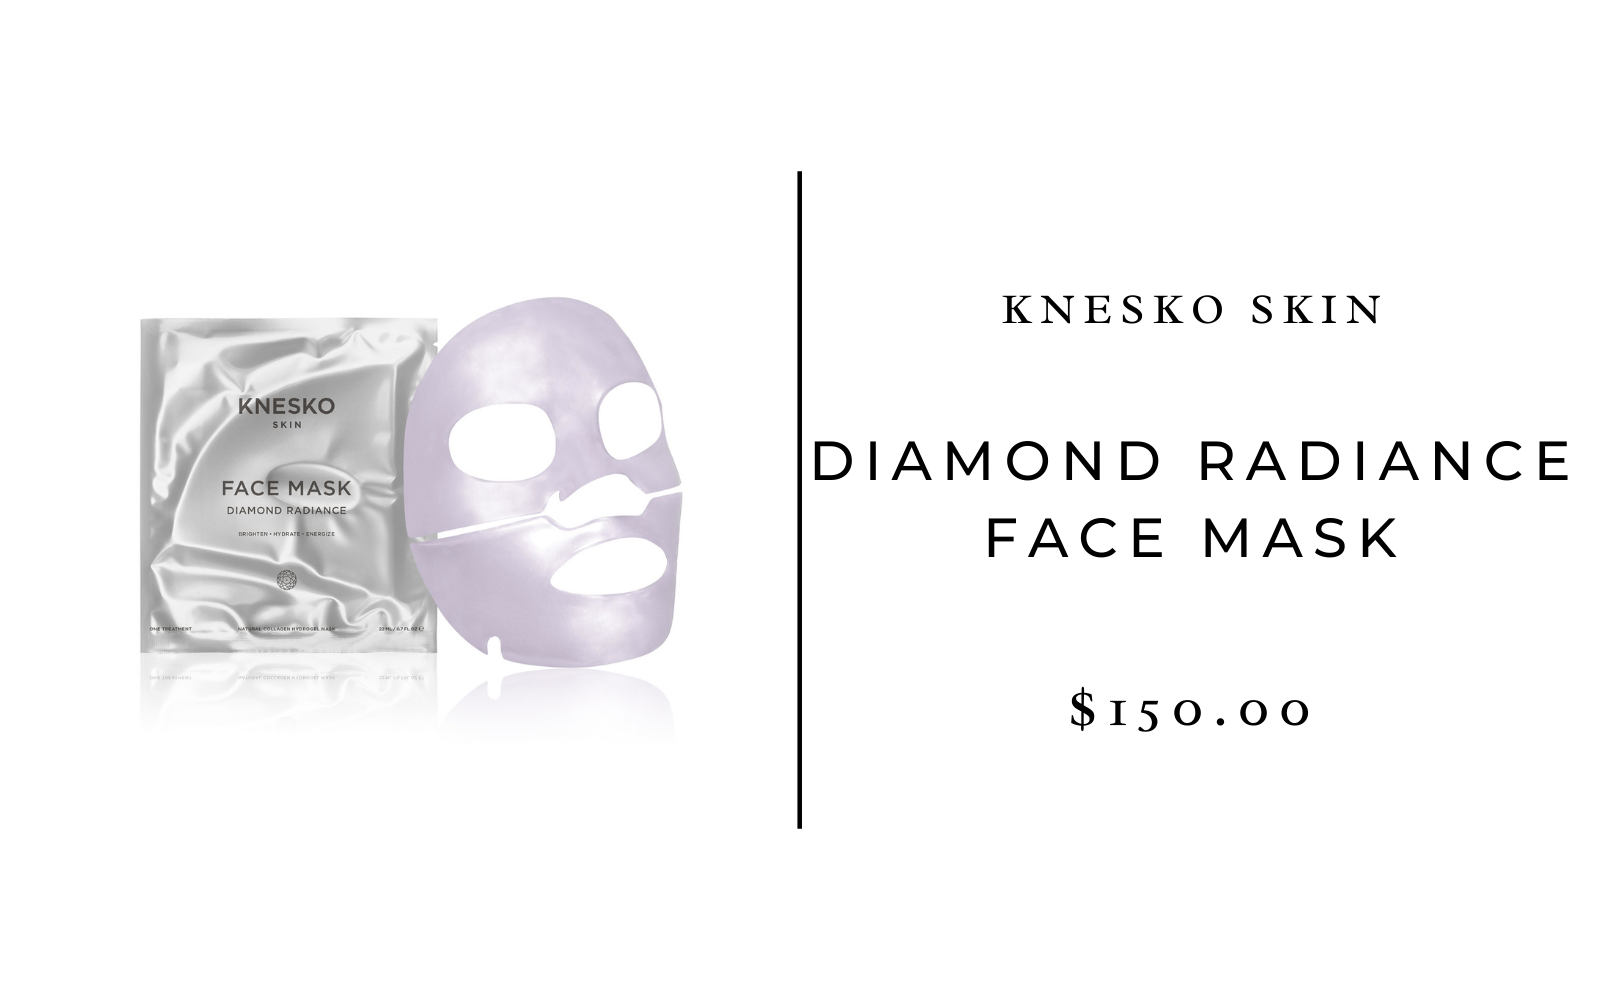 Knesko Skin Diamond Radiance Face Mask (4 treatments) 